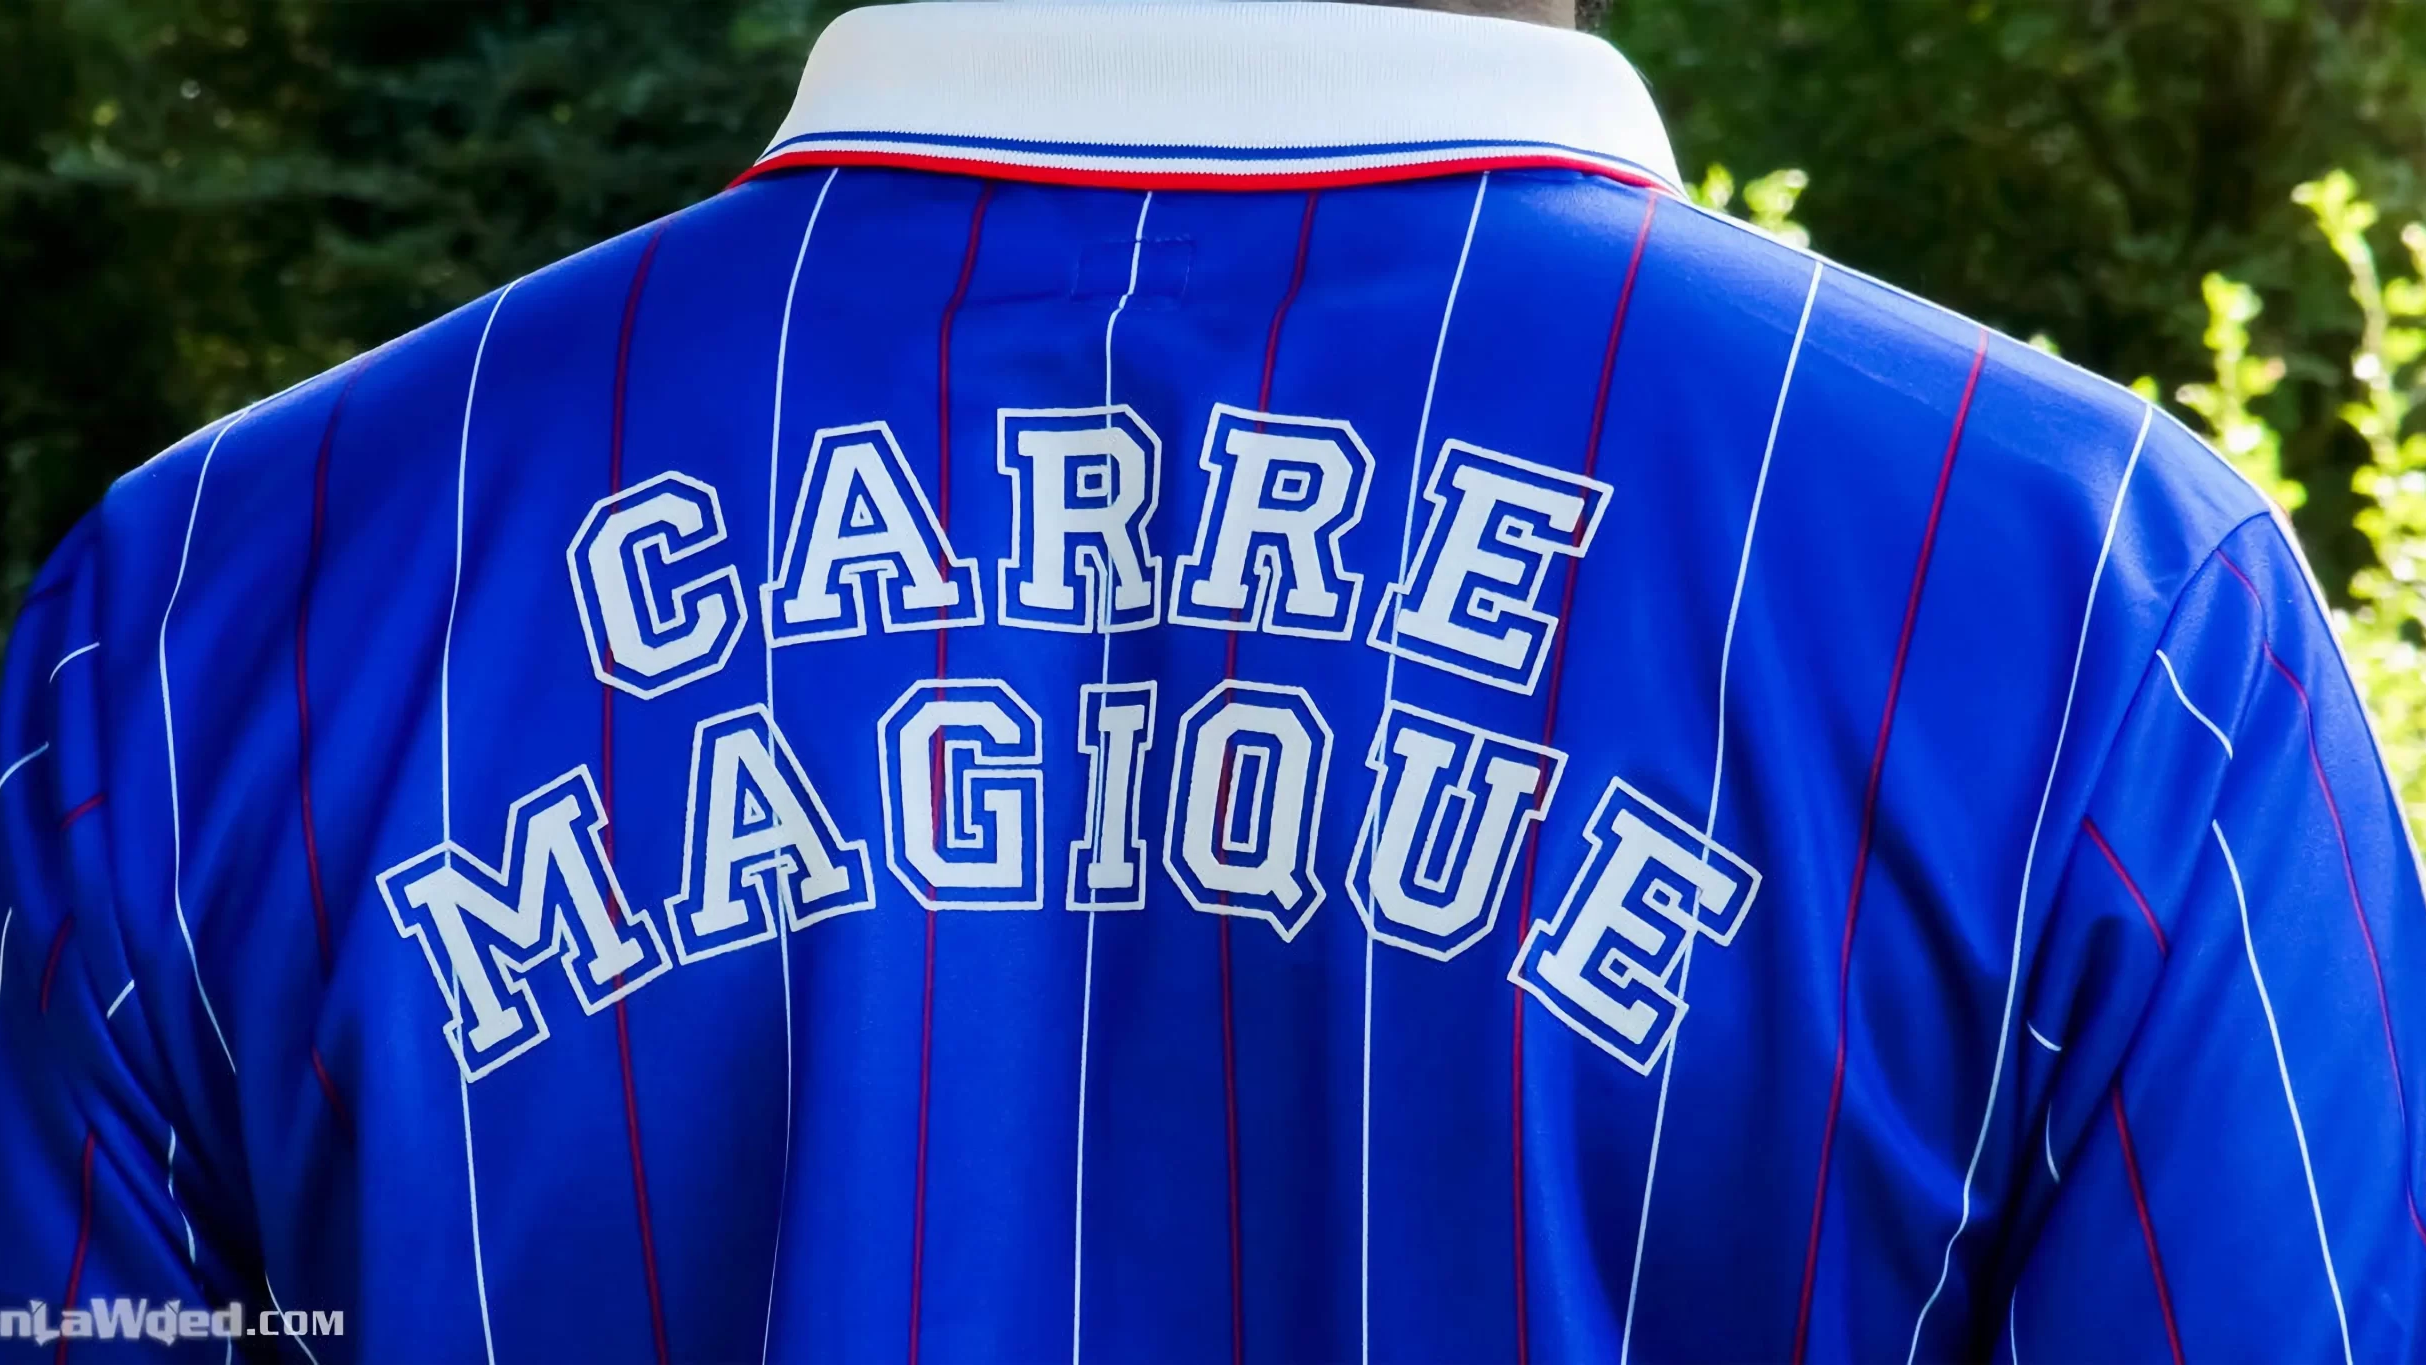 Men’s 2005 France ’82 Carre Magique Jersey by Adidas: Devoted (EnLawded.com file #lmchk90392ip2y122969kg9st)